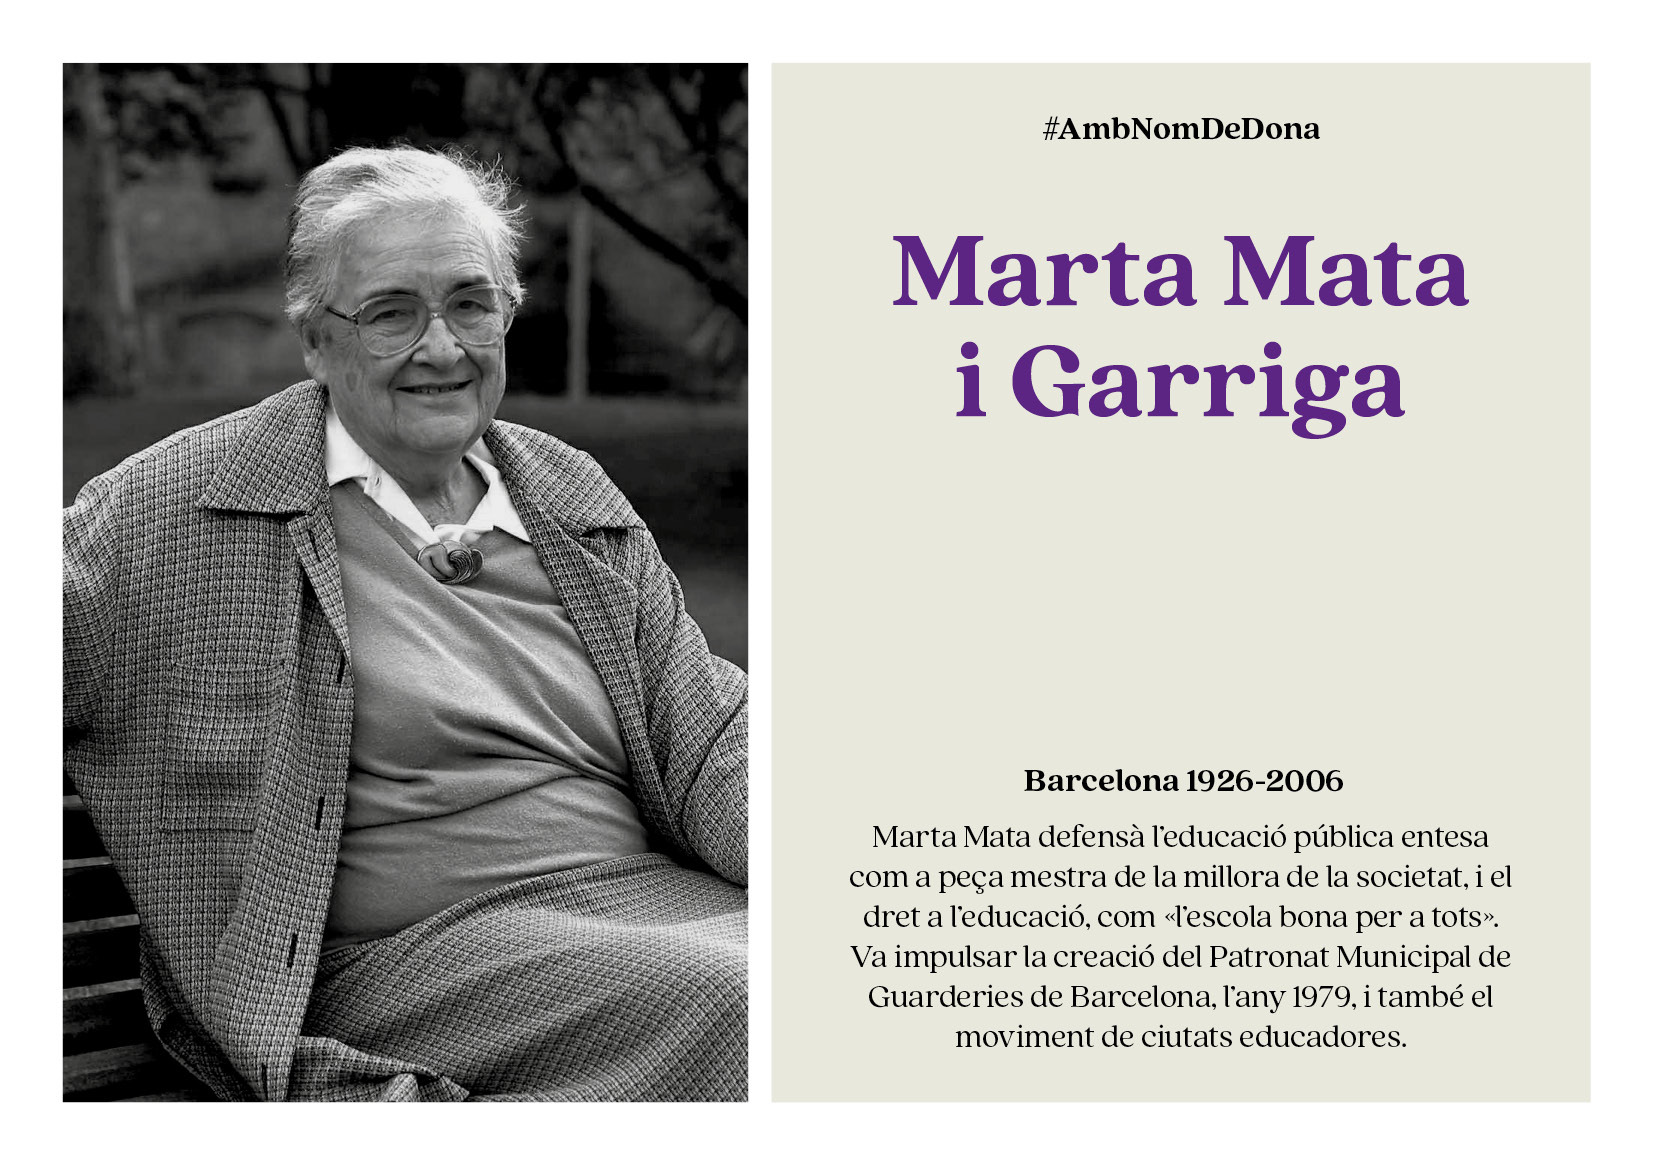 Marta Mata i Garriga